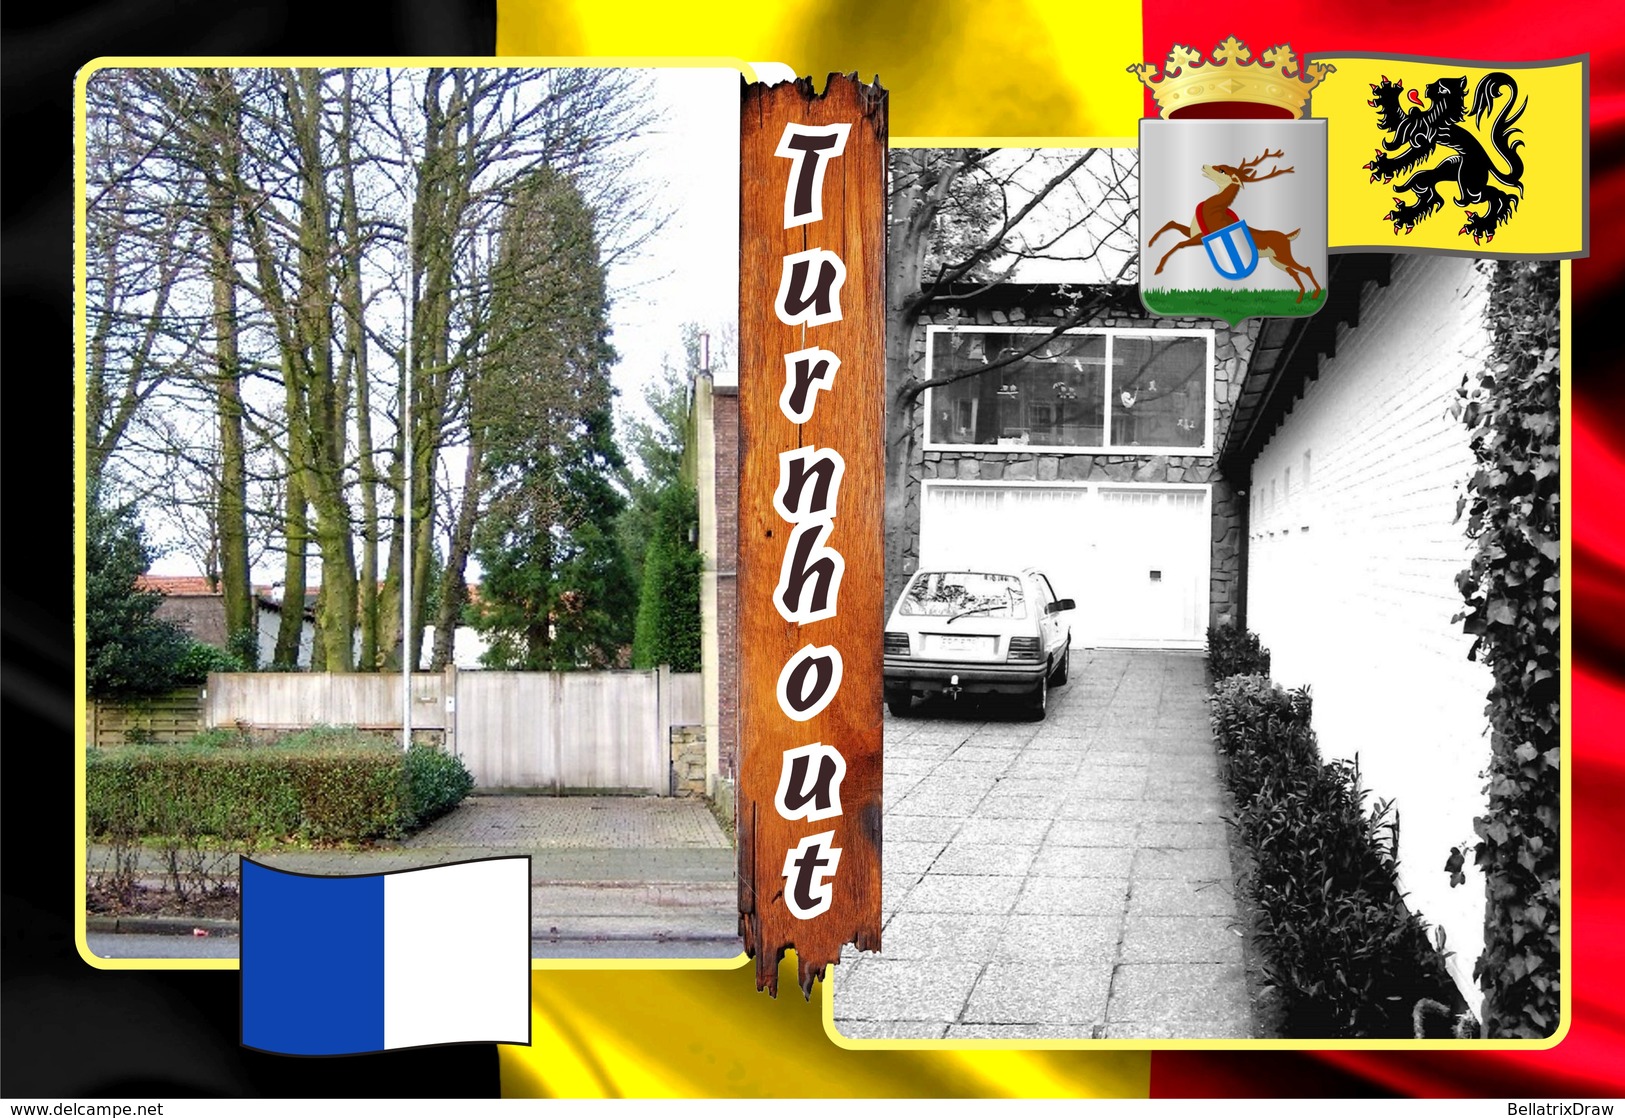 Postcards, REPRODUCTION, Municipalities of Belgium, Turnhout, duplex 346 to 396, 51 pcs.